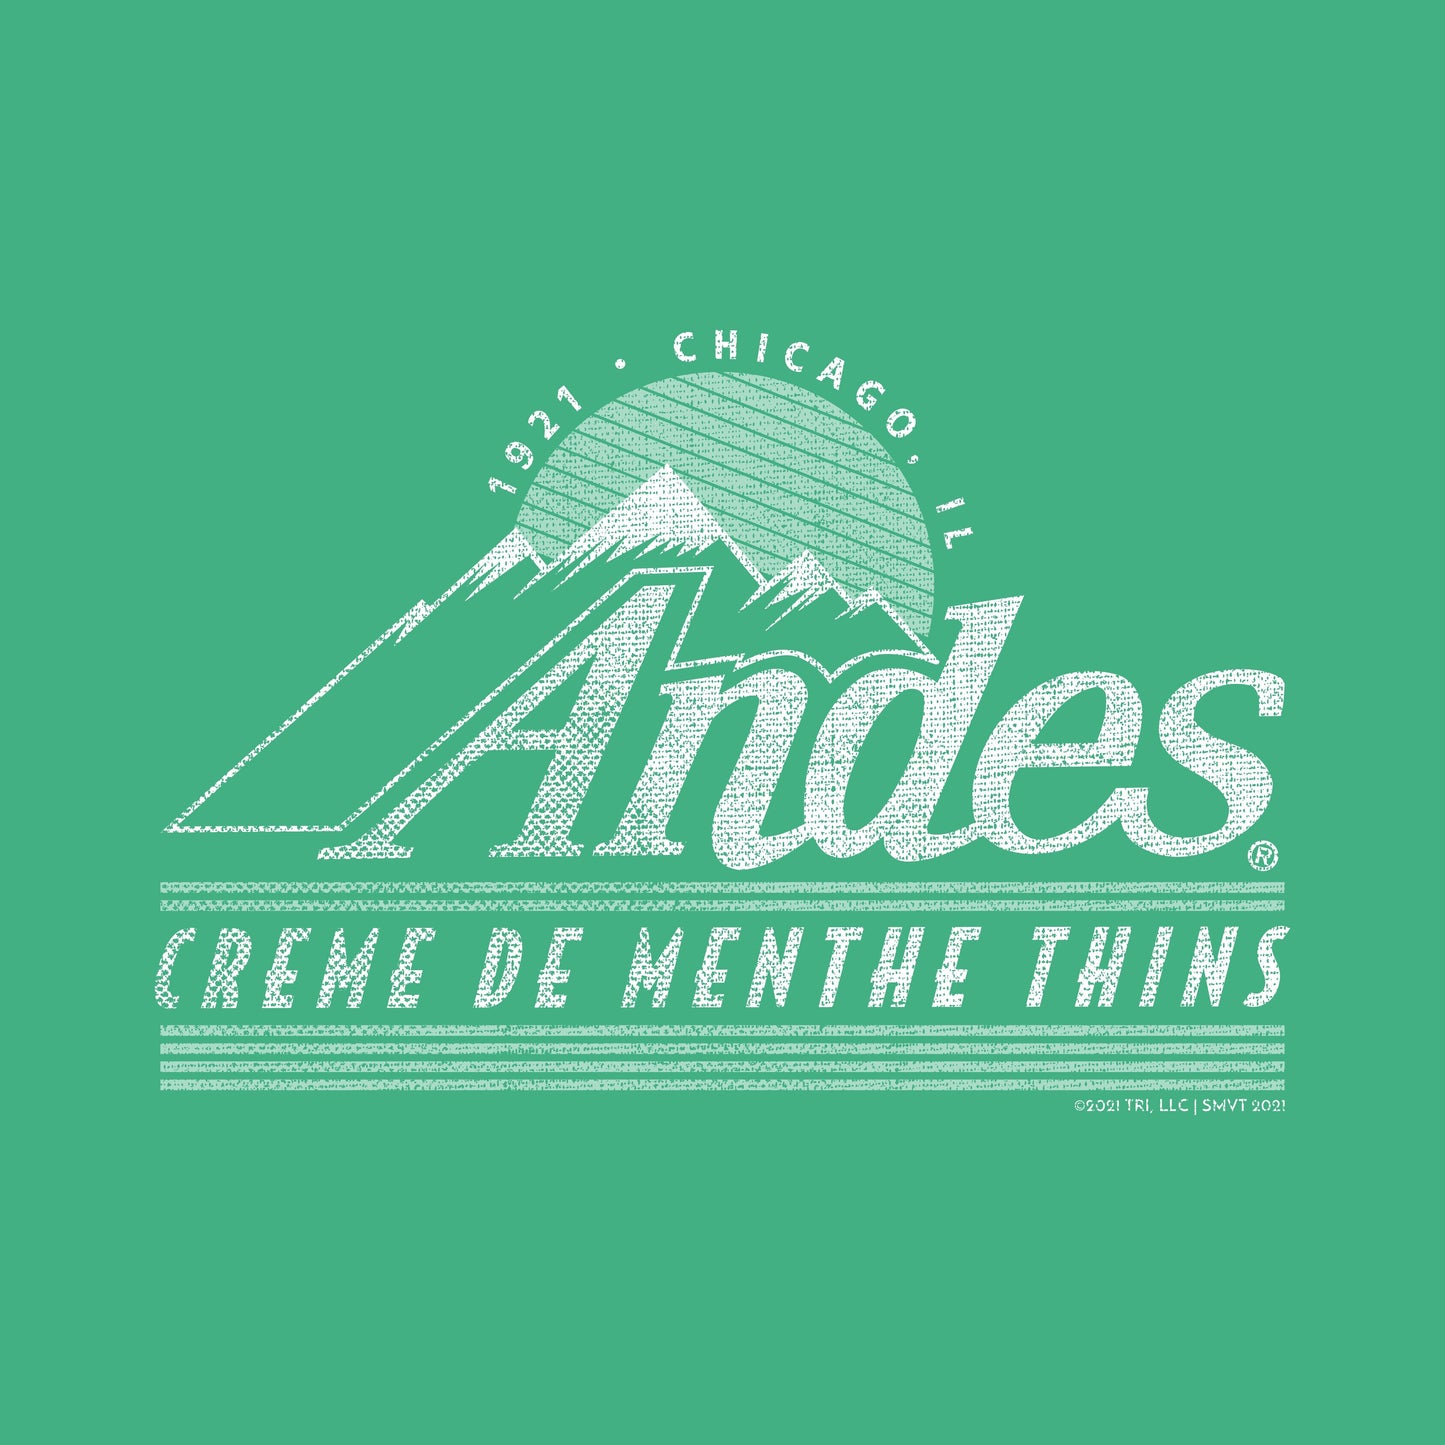 Andes® Mints Logo Tee | Chocolate Mint Unisex Tshirt | Adventure Shirt